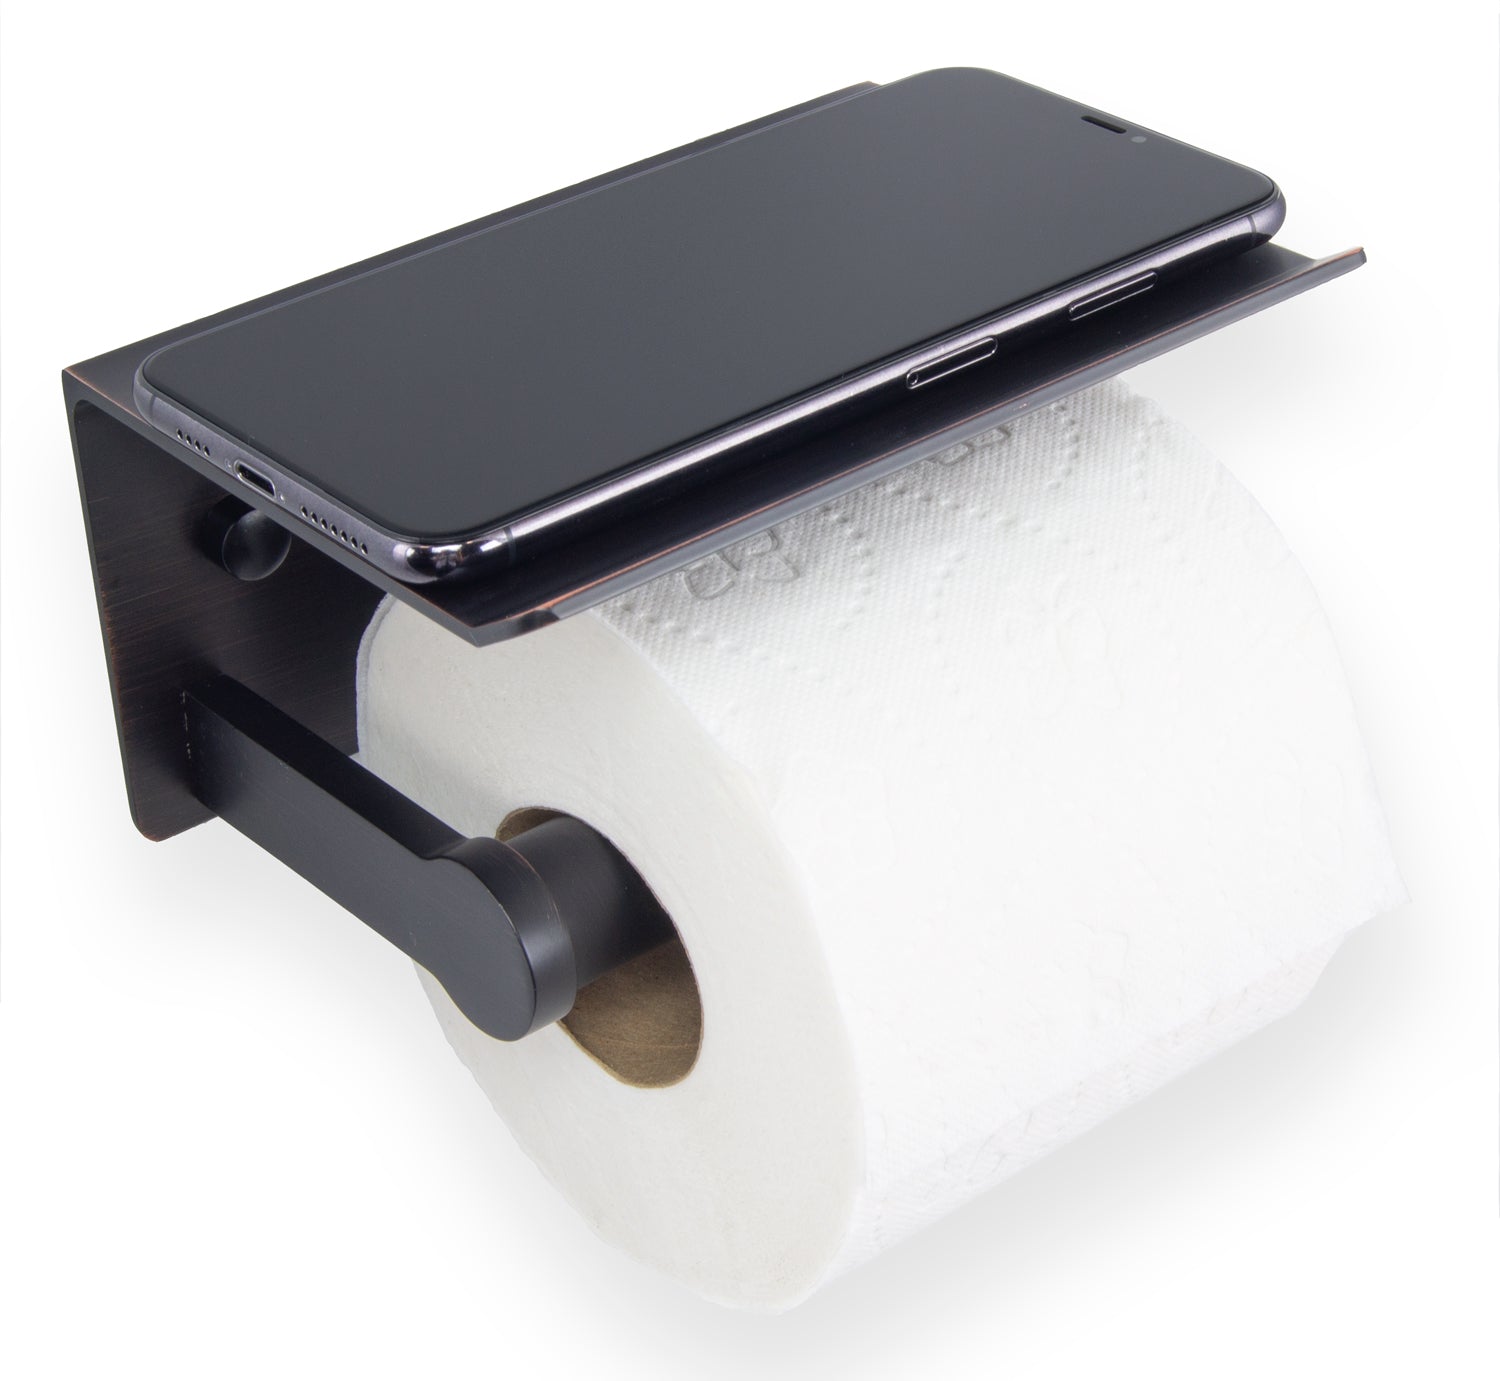 Solid Wood Roll Paper Holder Wall-mounted Tissue Holder Napkin Holders  Bathroom Shelves Paper Roll Holder